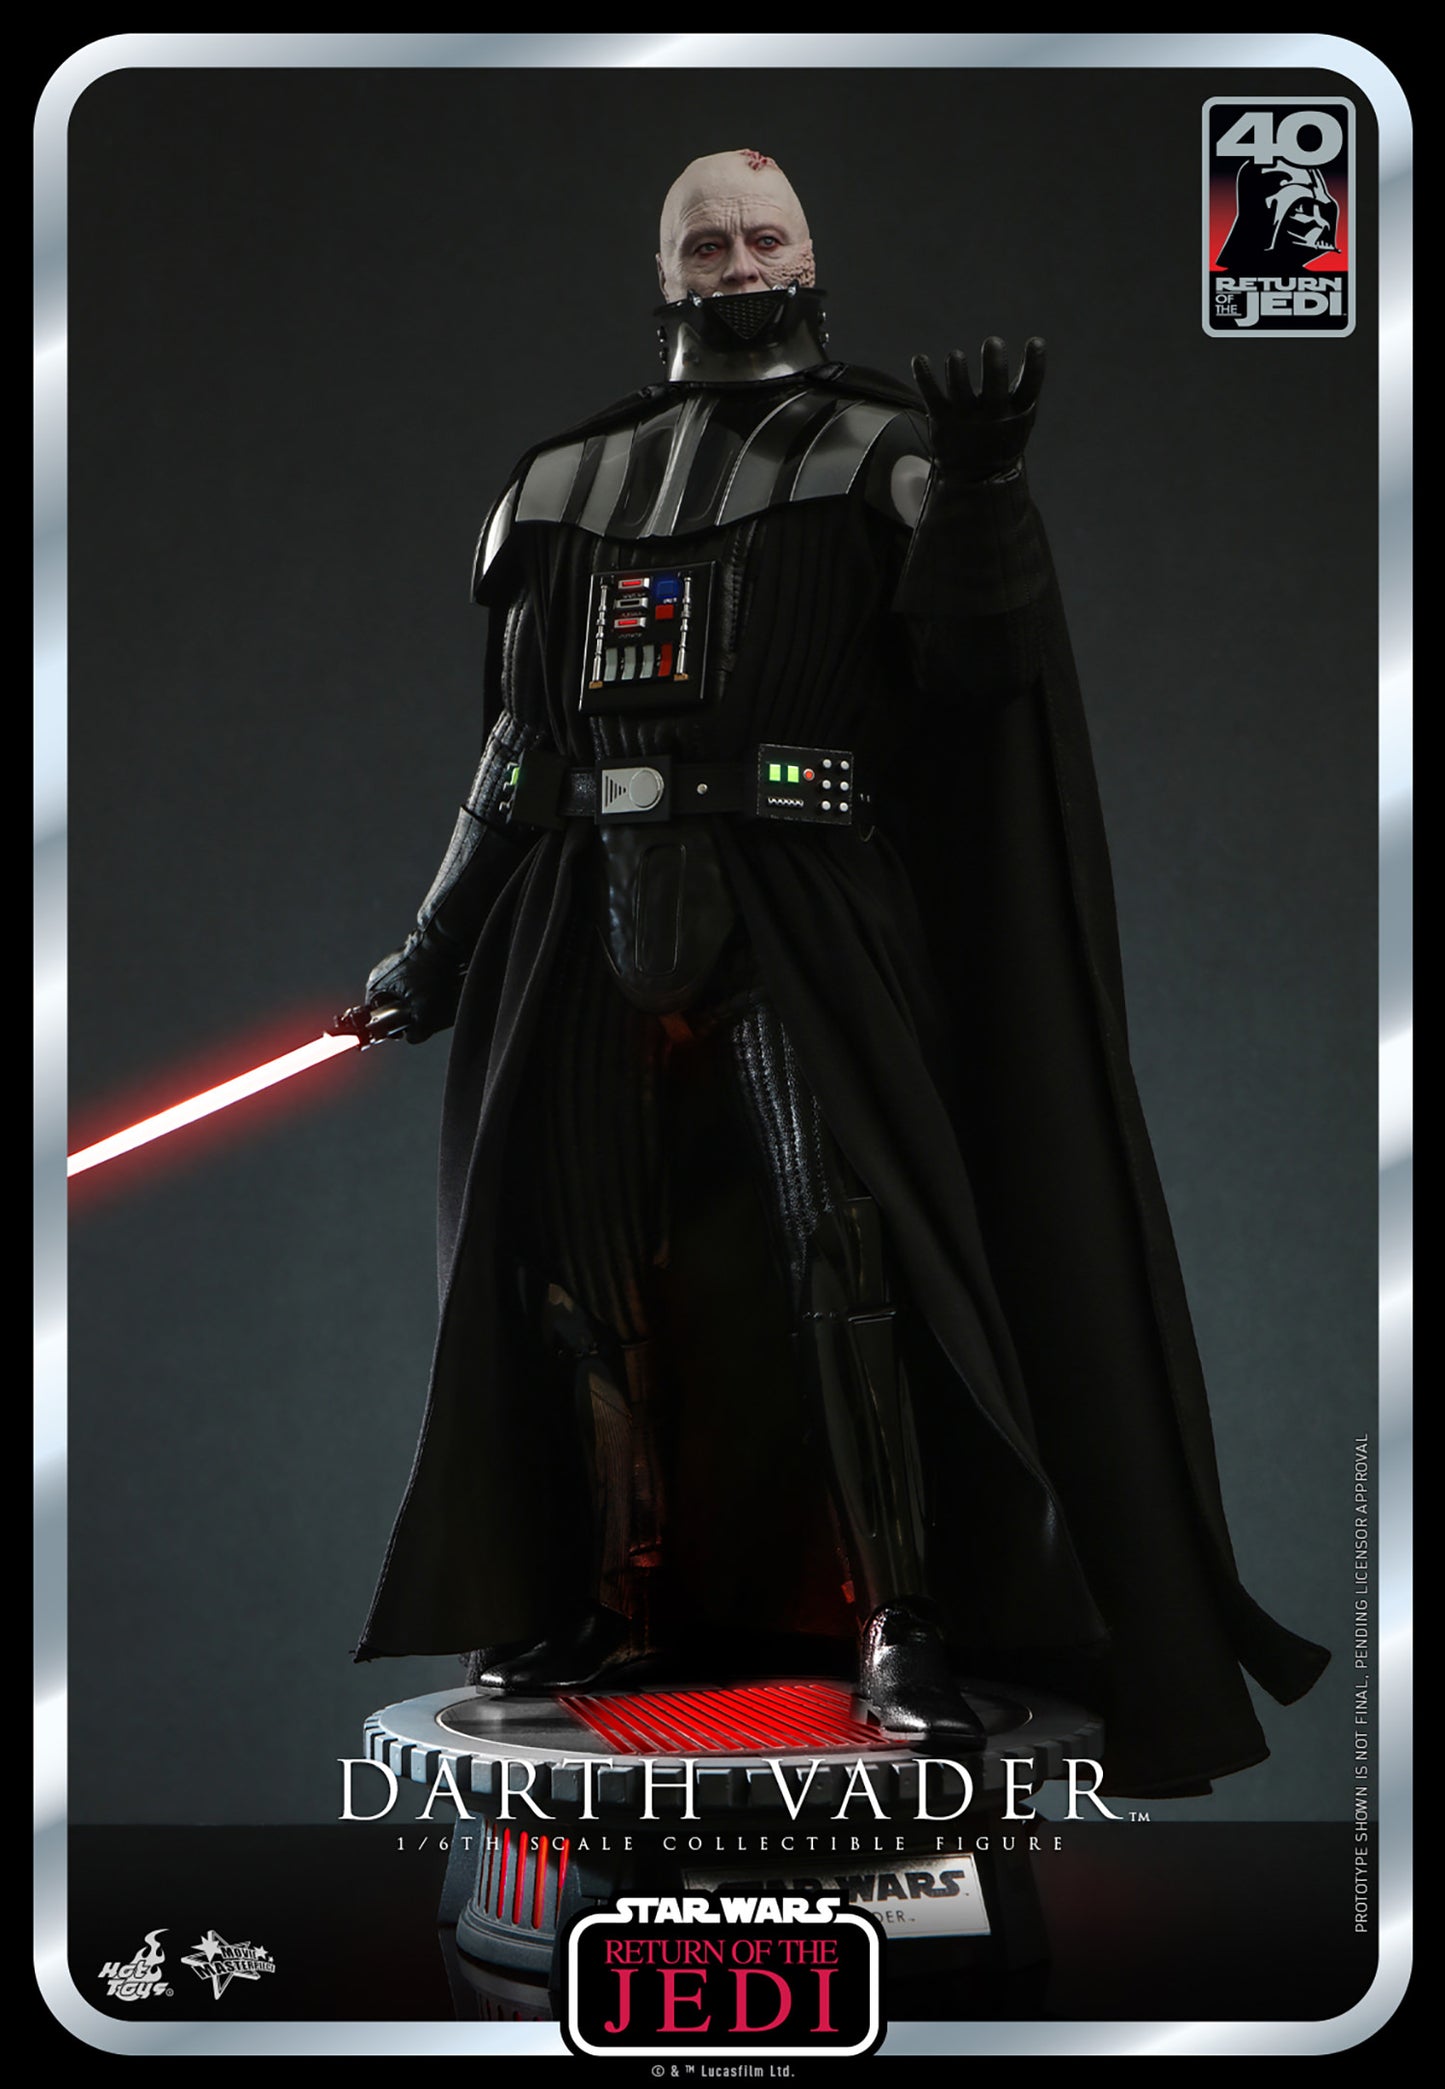 Darth Vader (Return of the Jedi 40th Anniversary Collection) 1/6 Scale Figure